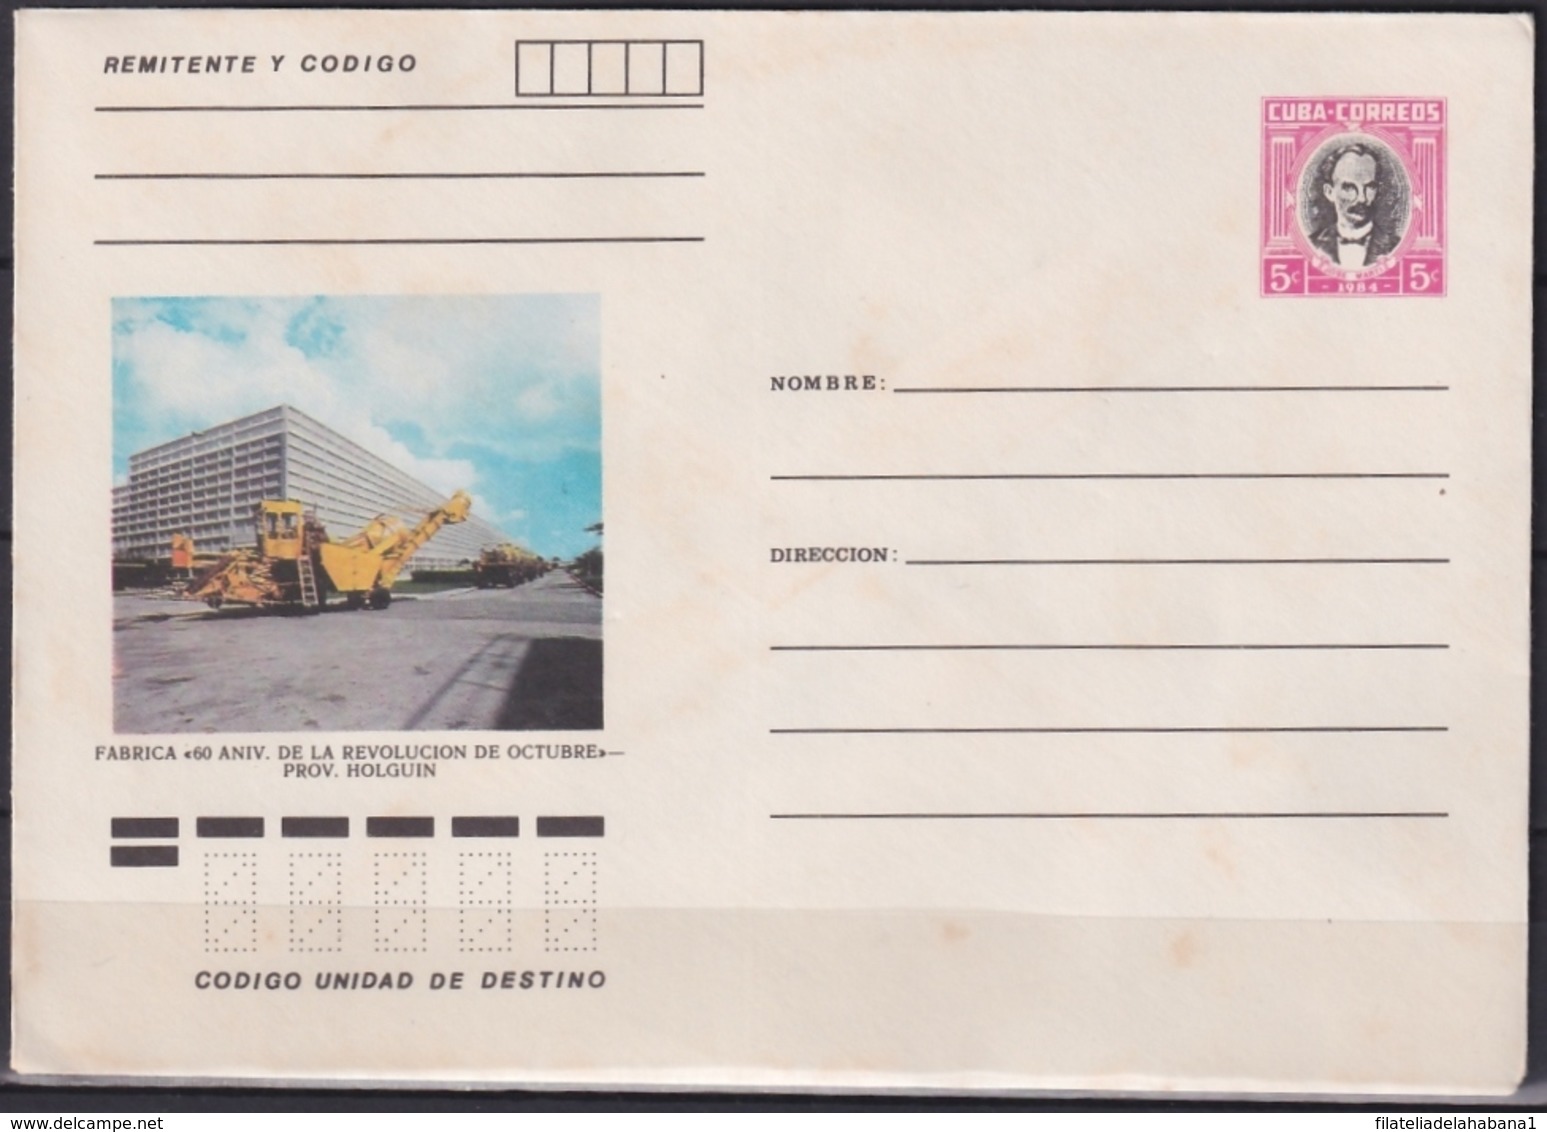 1984-EP-120 CUBA 1984 5c POSTAL STATIONERY COVER. HOLGUIN, FABRICA 60 ANIVERSARIO DE LA REVOLUCION DE OCTUBRE. - Briefe U. Dokumente